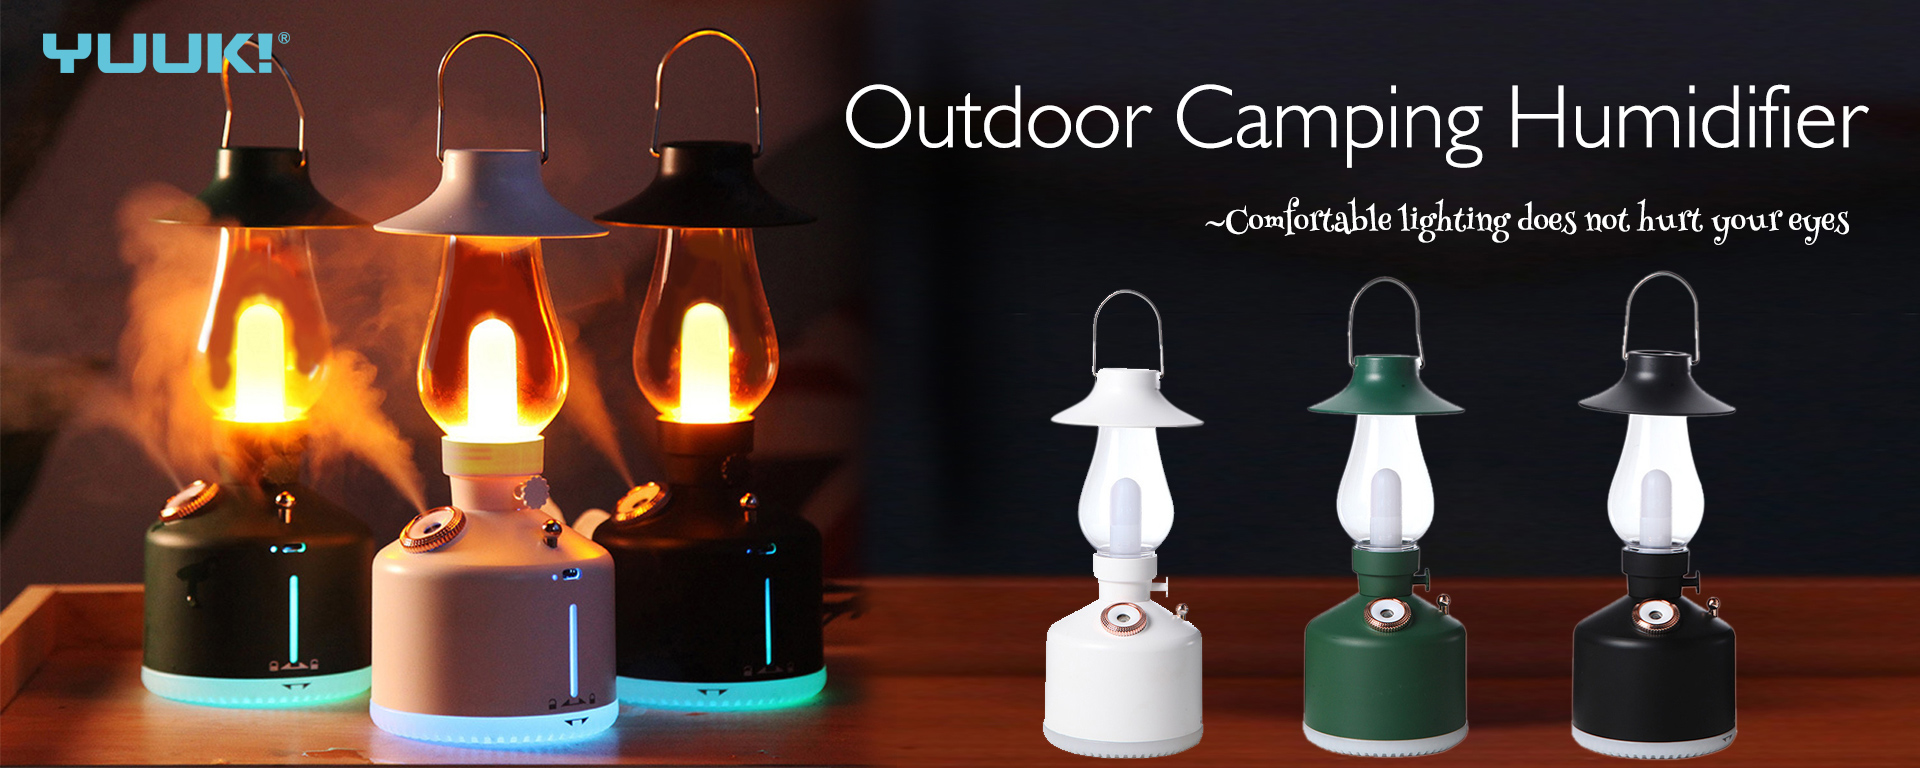 Outdoor Camping Humidifier